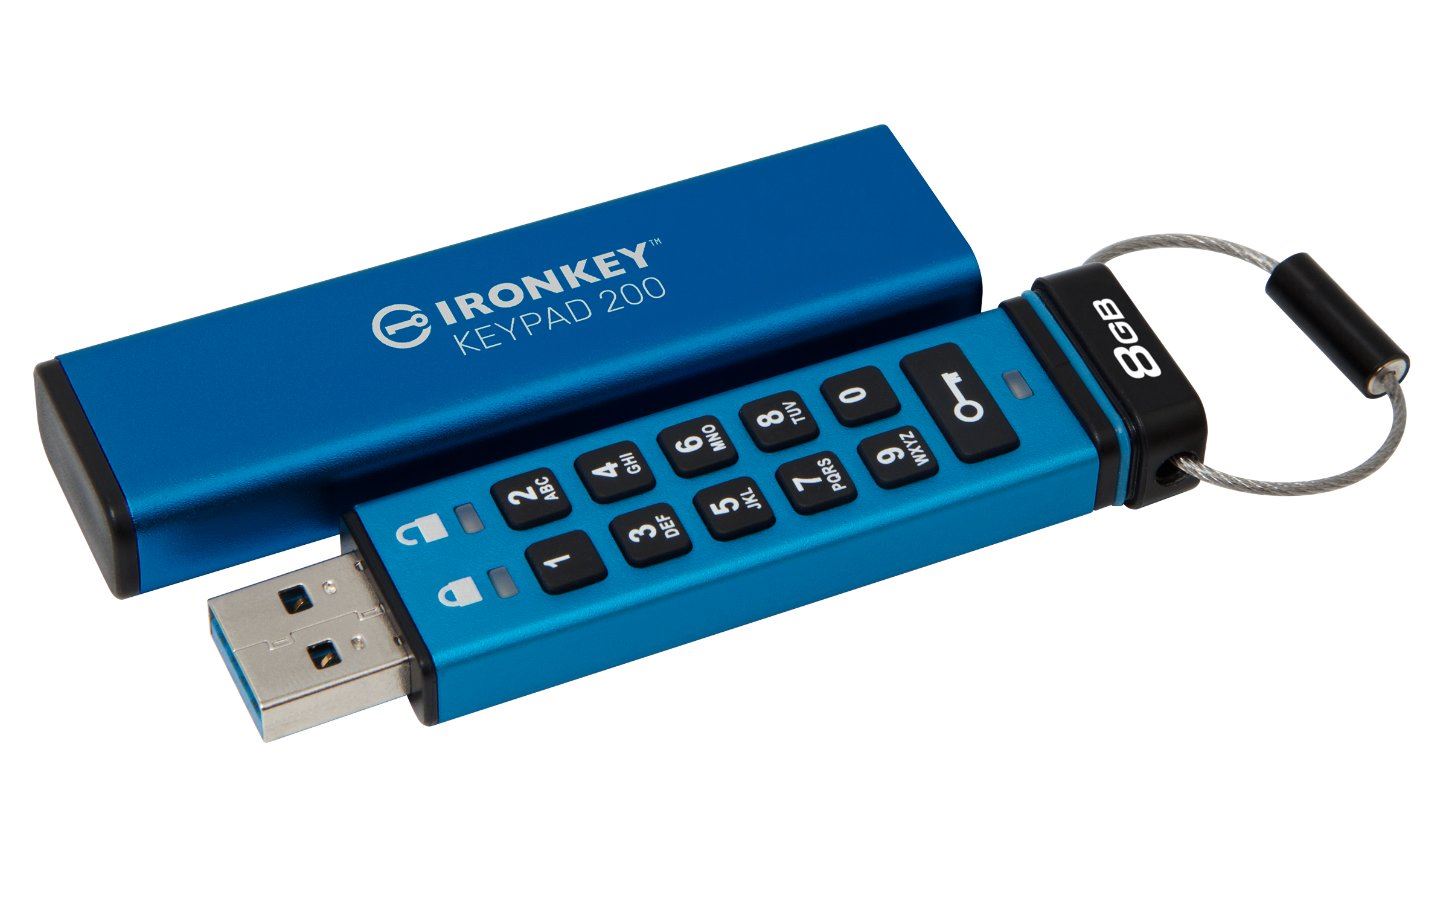 Kingston Flash Disk IronKey 8GB Keypad 200 encrypted USB flash drive2 